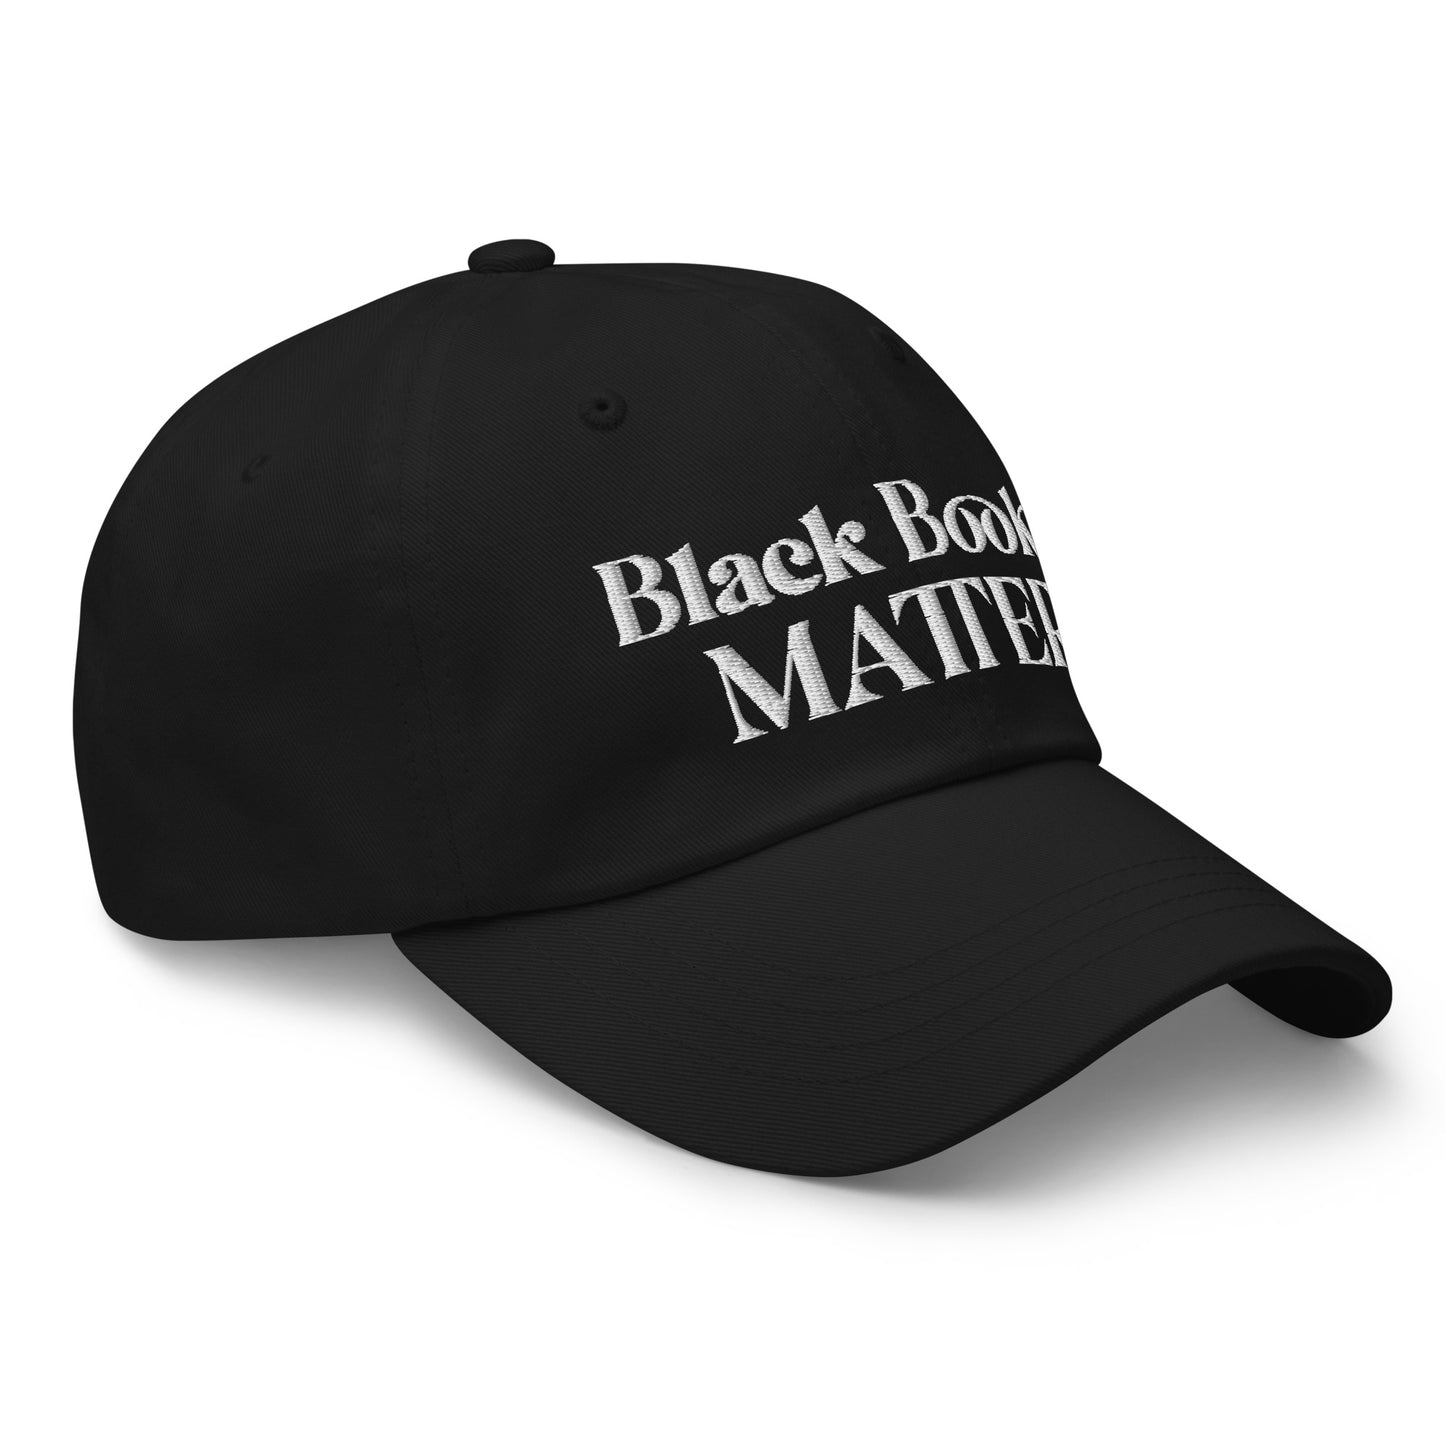 Black Books Matter hat